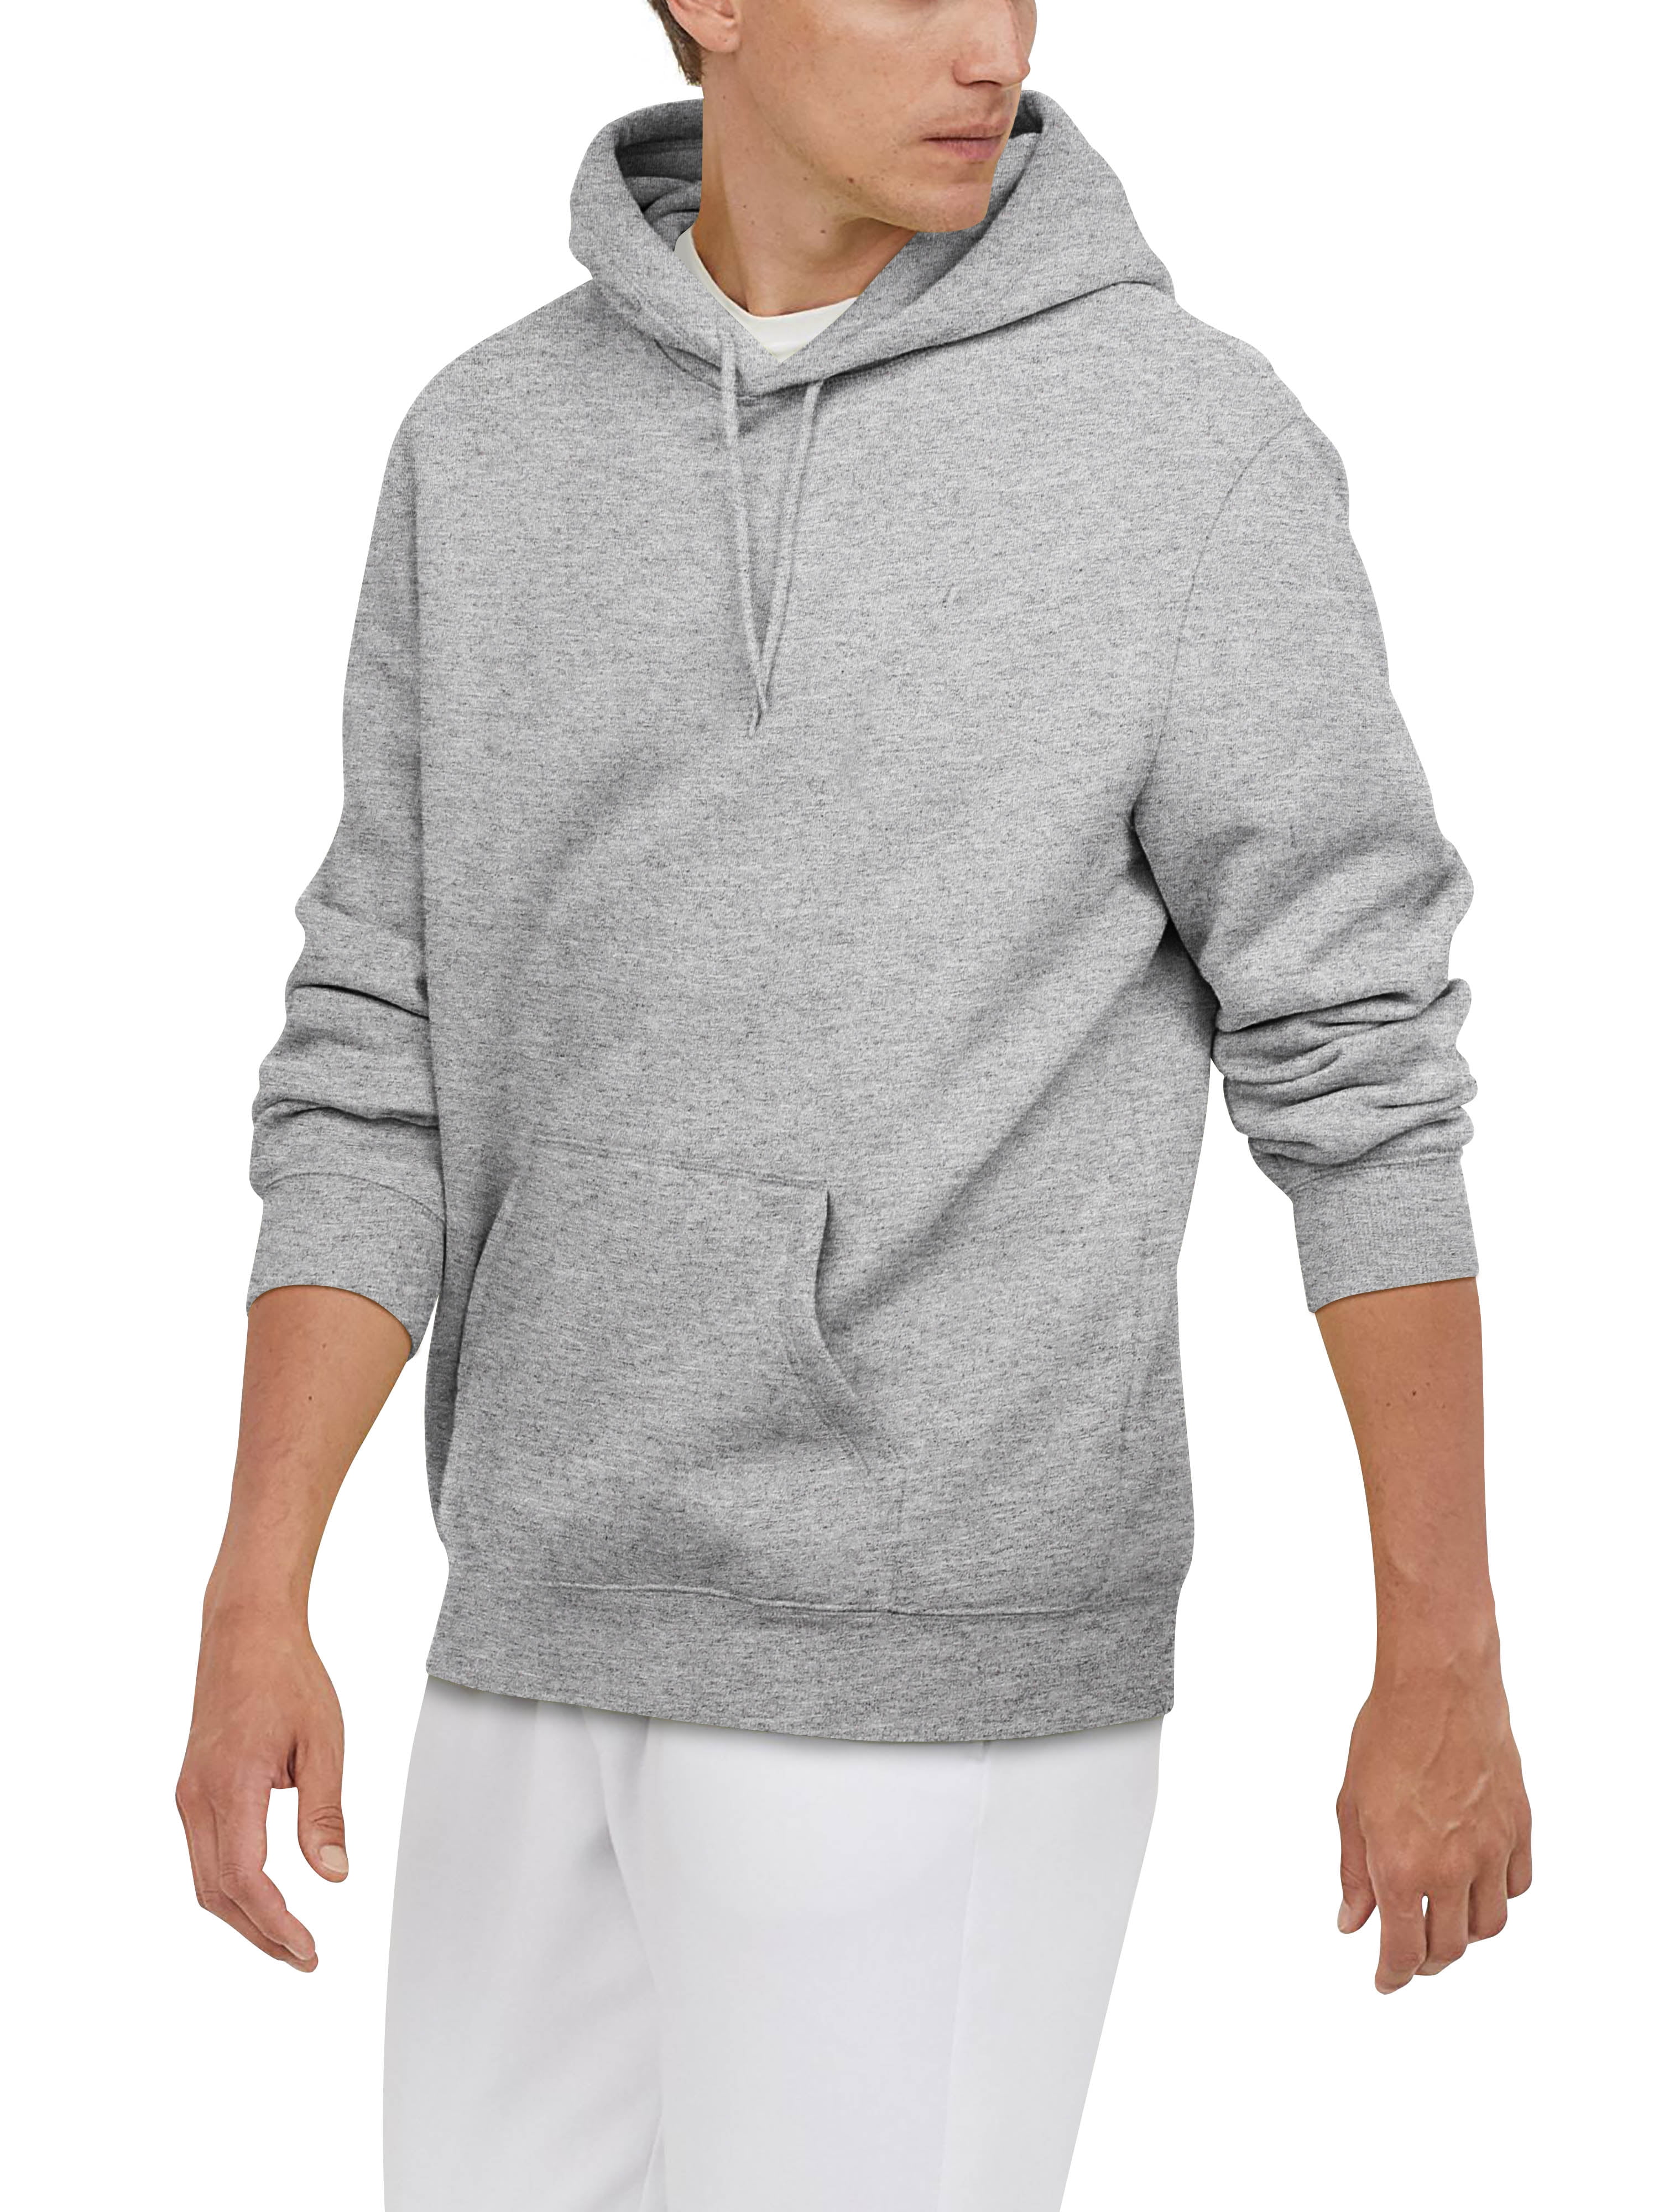 Tek Gear Performance Full Zip Ultra Soft Fleece Hoodie Sweatshirt 2 Tone  Gray